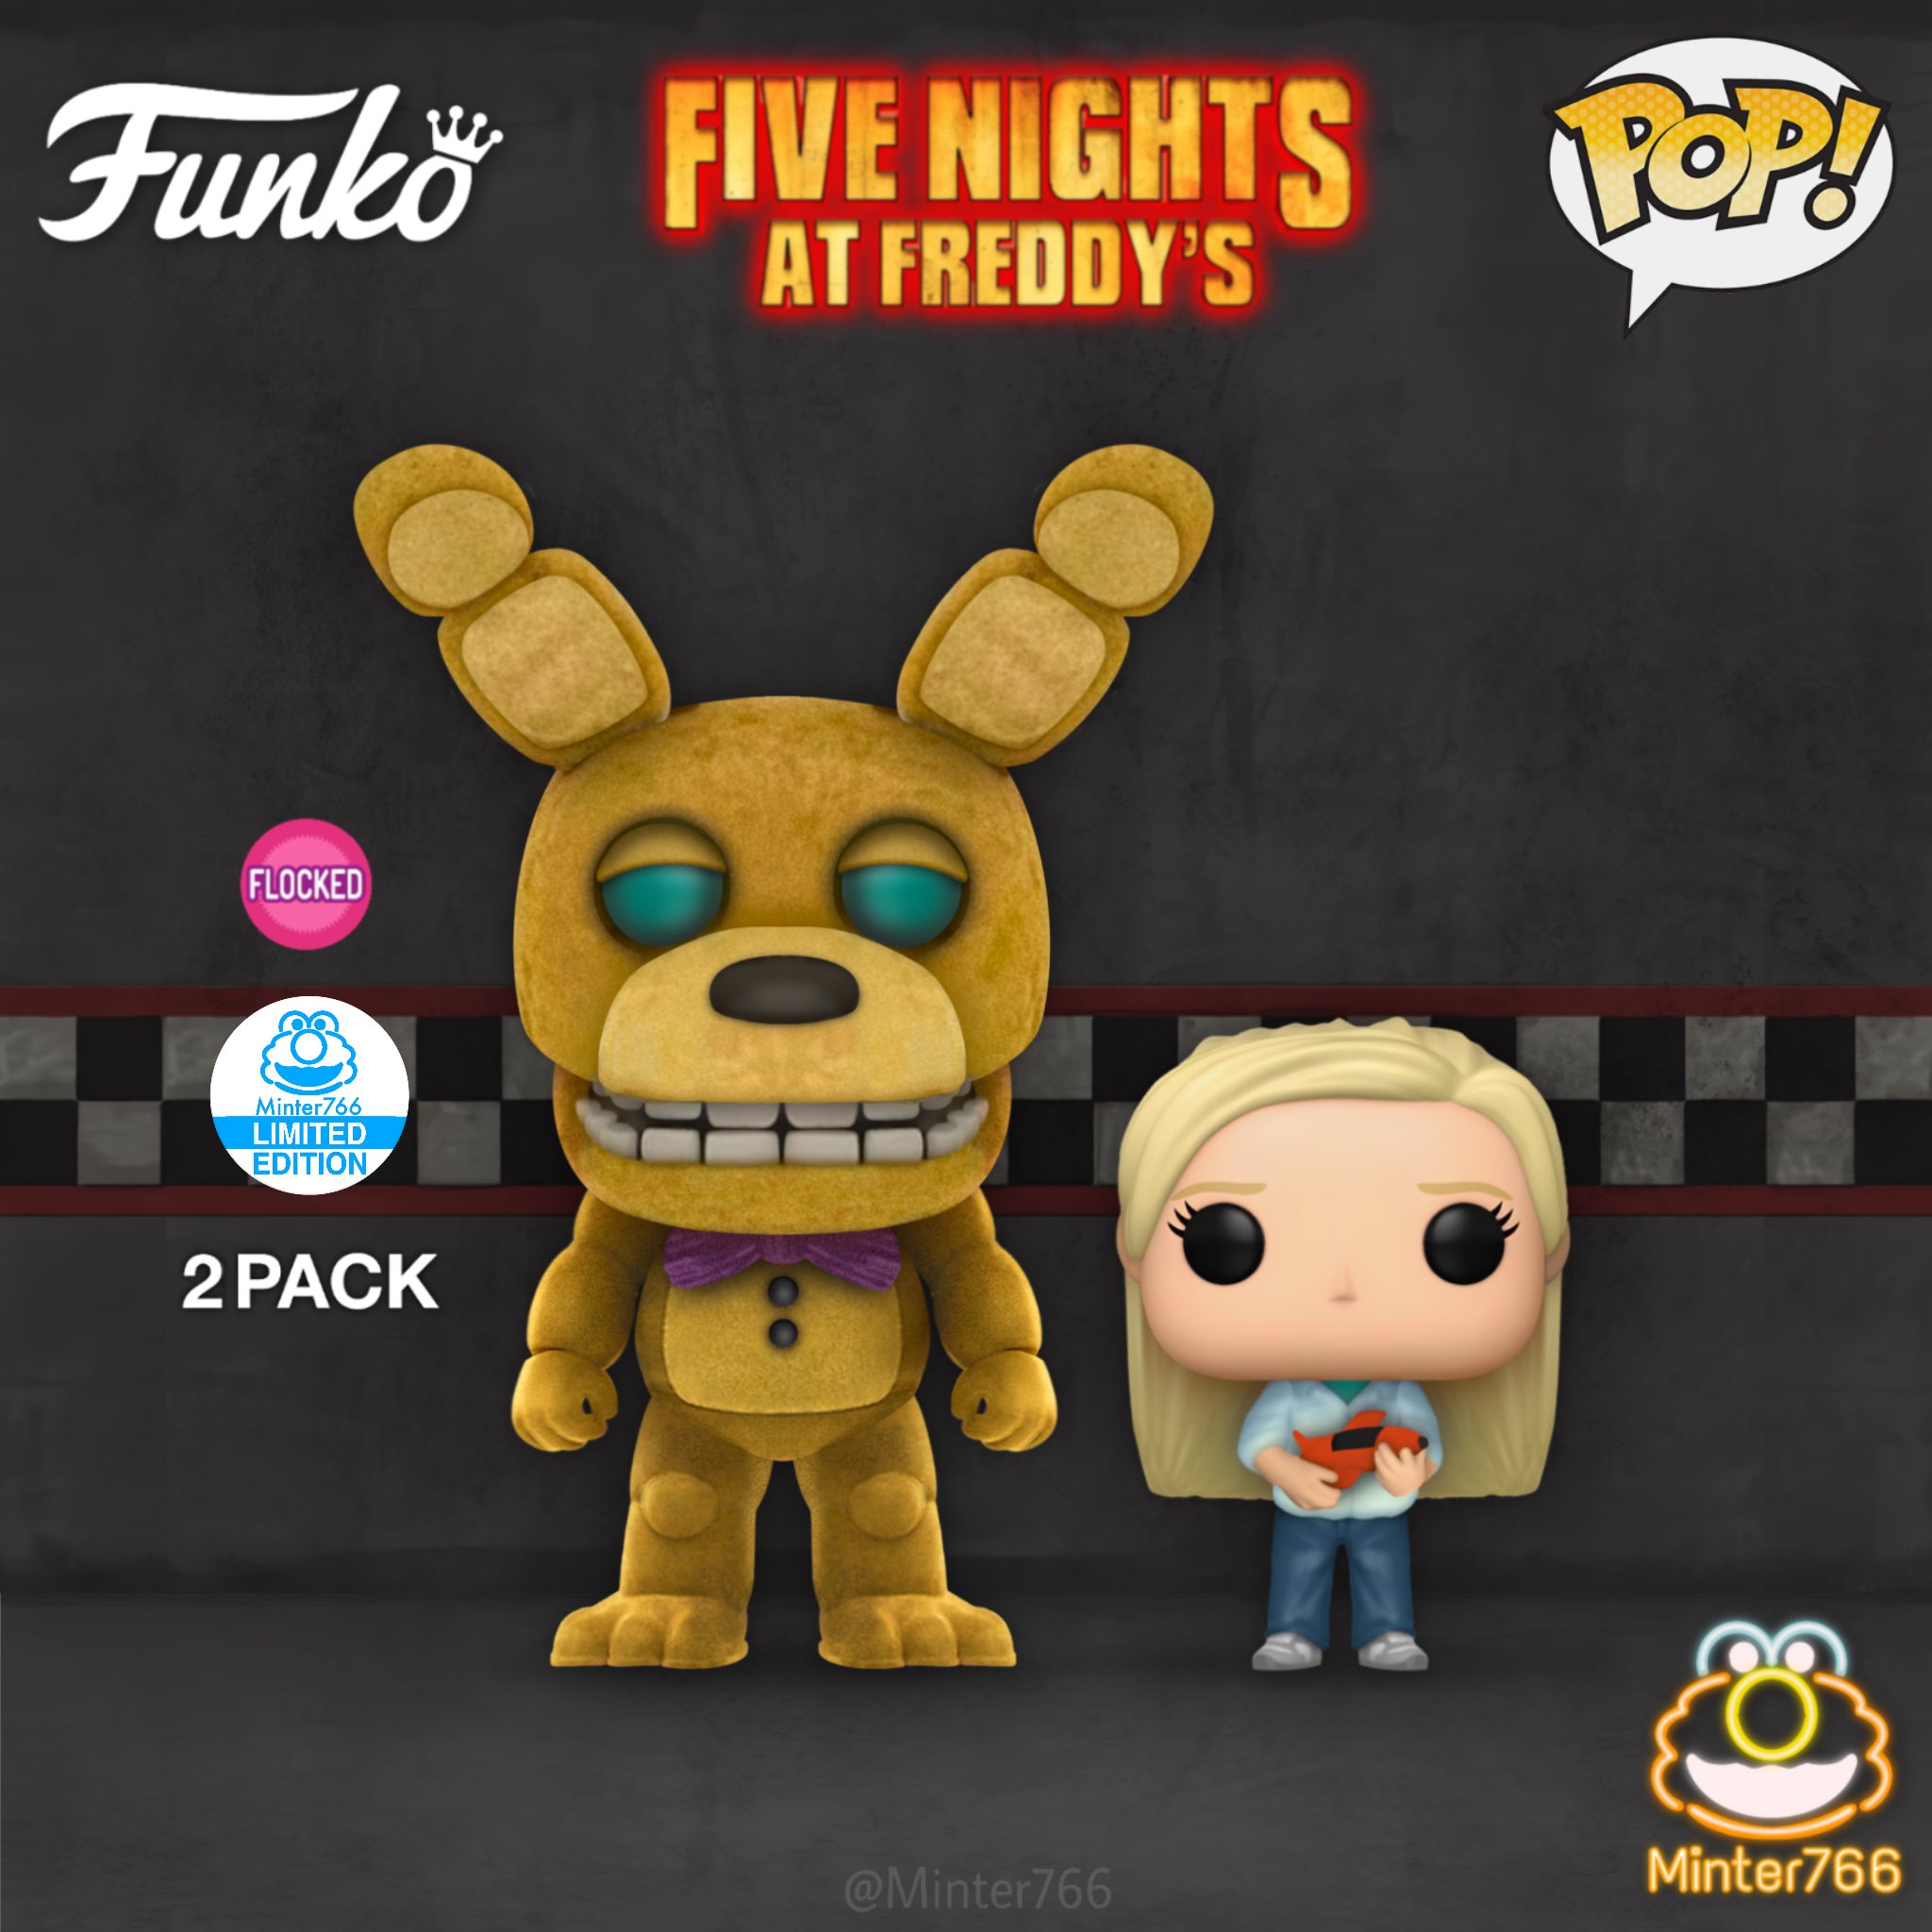 Minter on X: Five Nights At Freddy's Movie - Easter Eggs Pt.2  Funko Pop  Concept. #FNAF #FNAFMovie #FiveNightsAtFreddys #FreddyFazbearsPizza  #Freddyfazbear #HappyHalloween #Funko #FunkoPop #ConcepArt #Art   / X